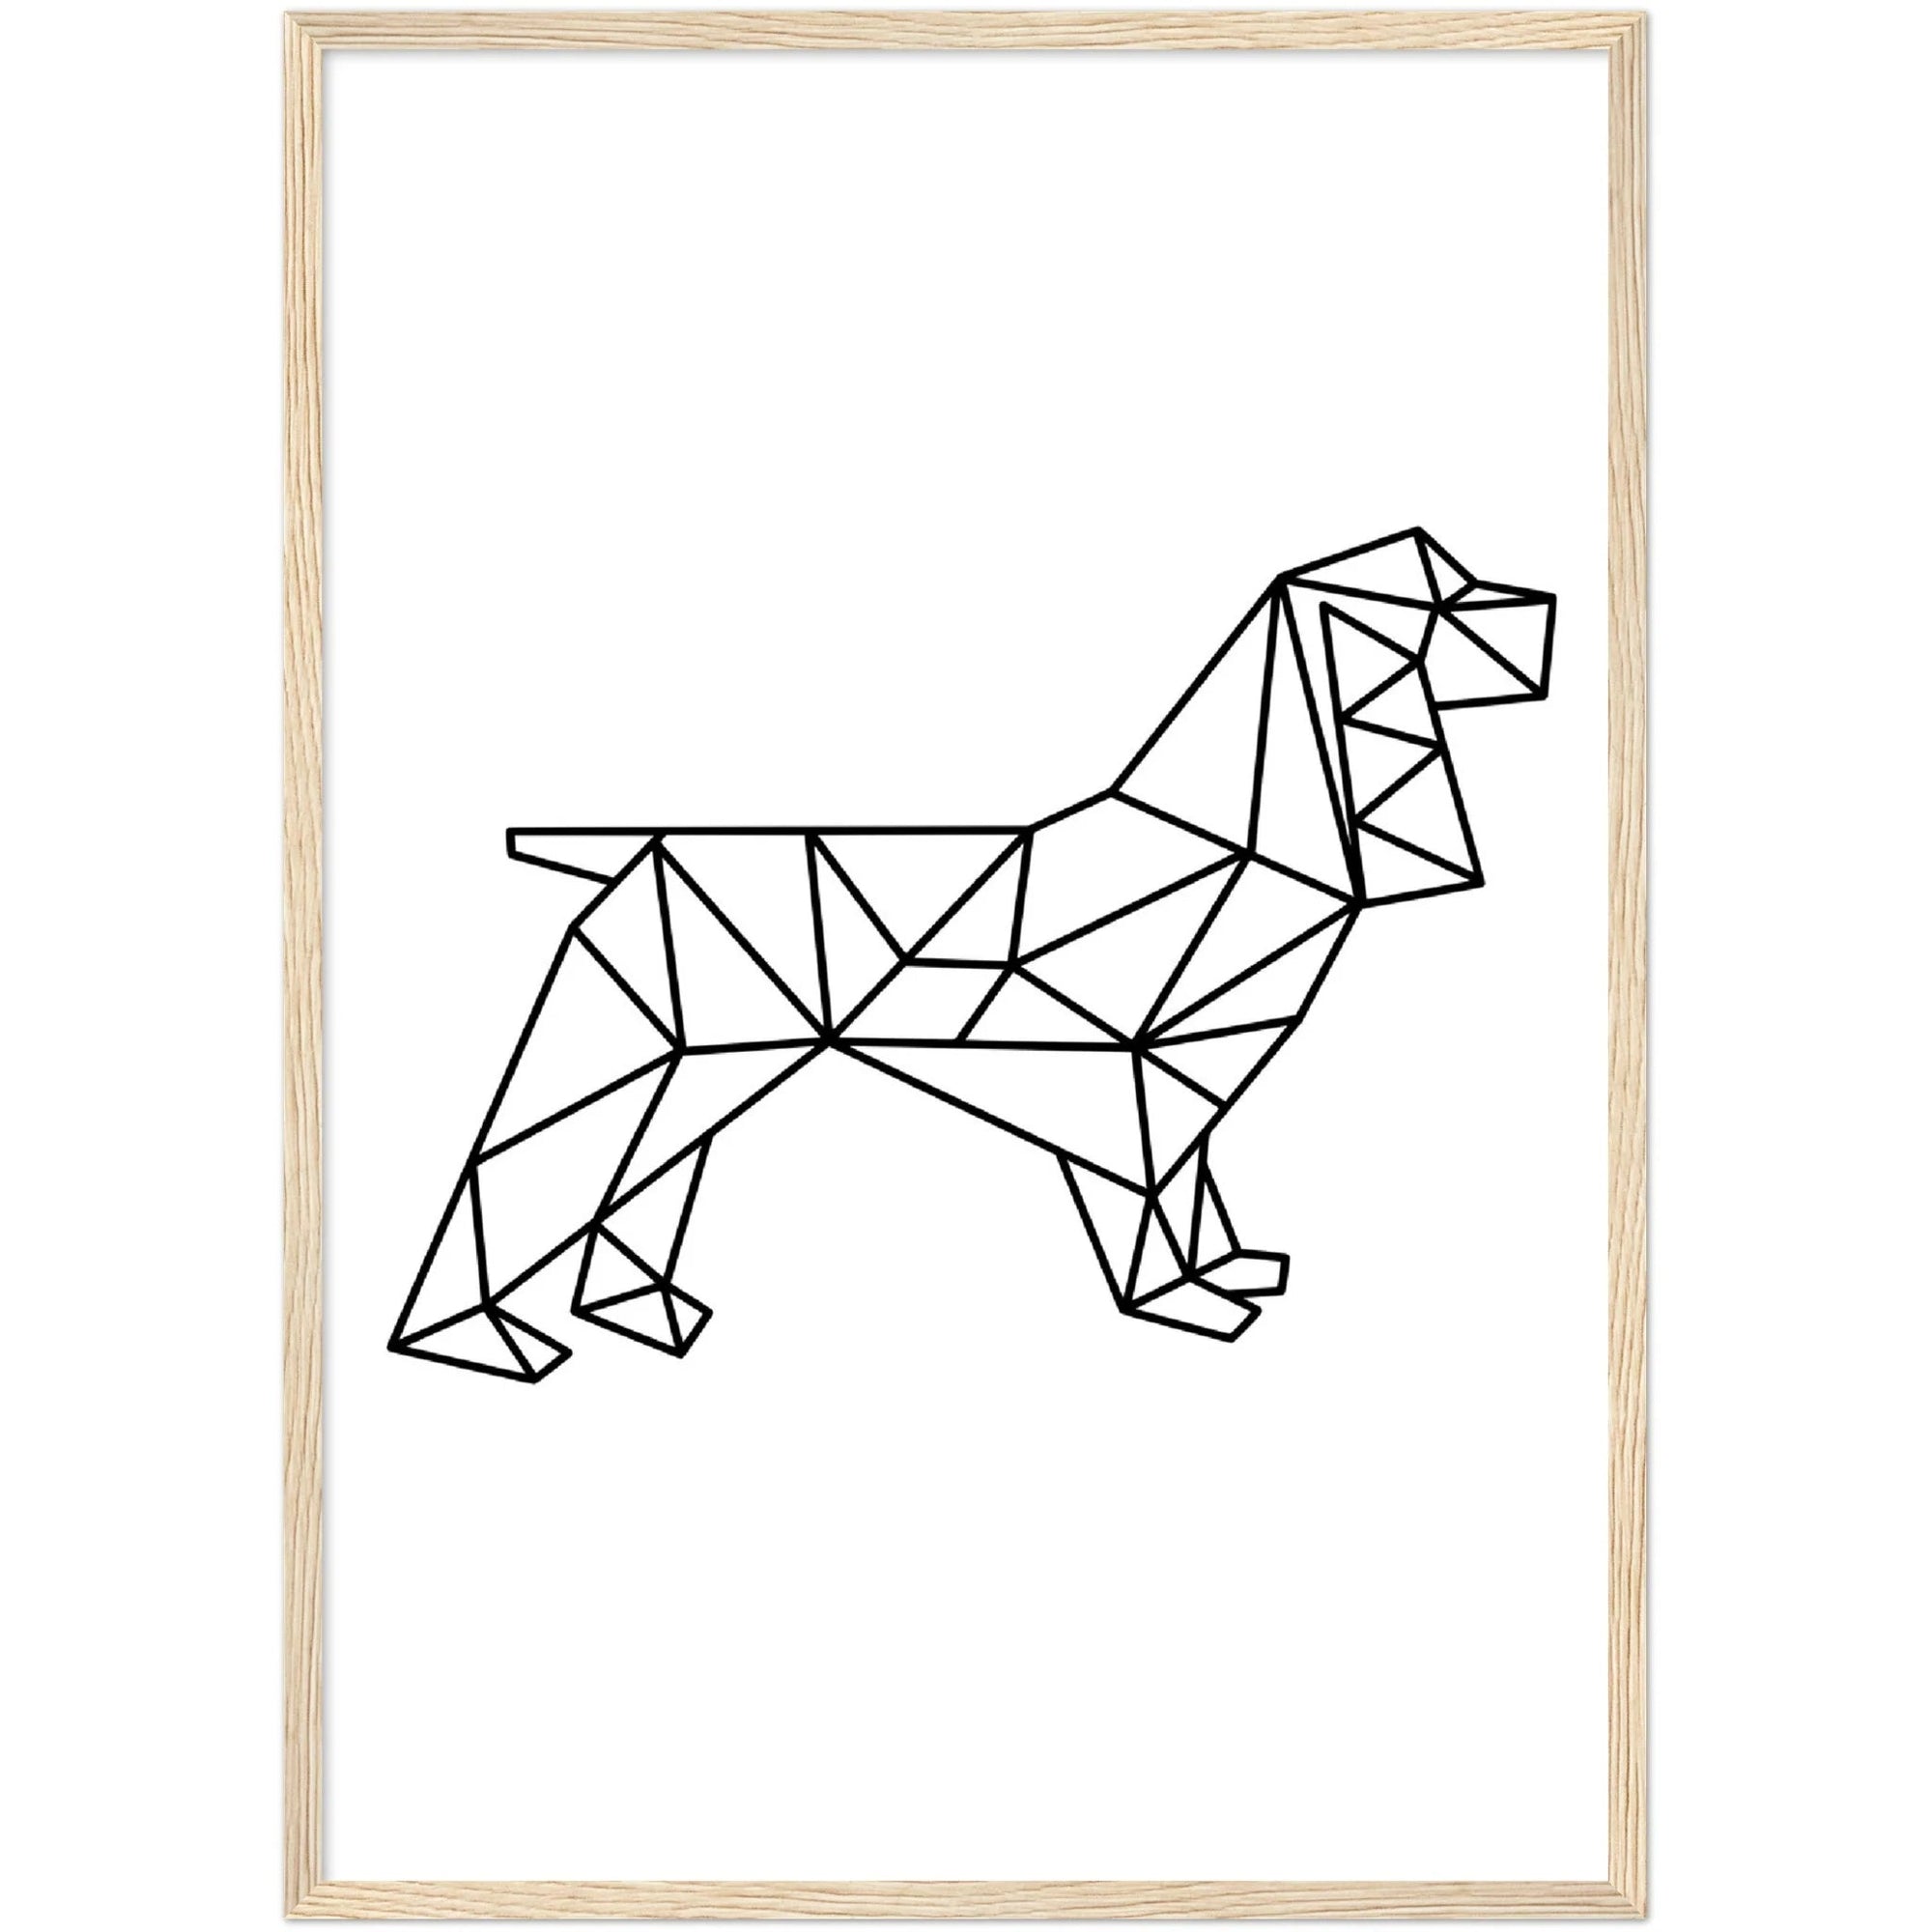 Geometric Dog Wall Art - The Trendy Art